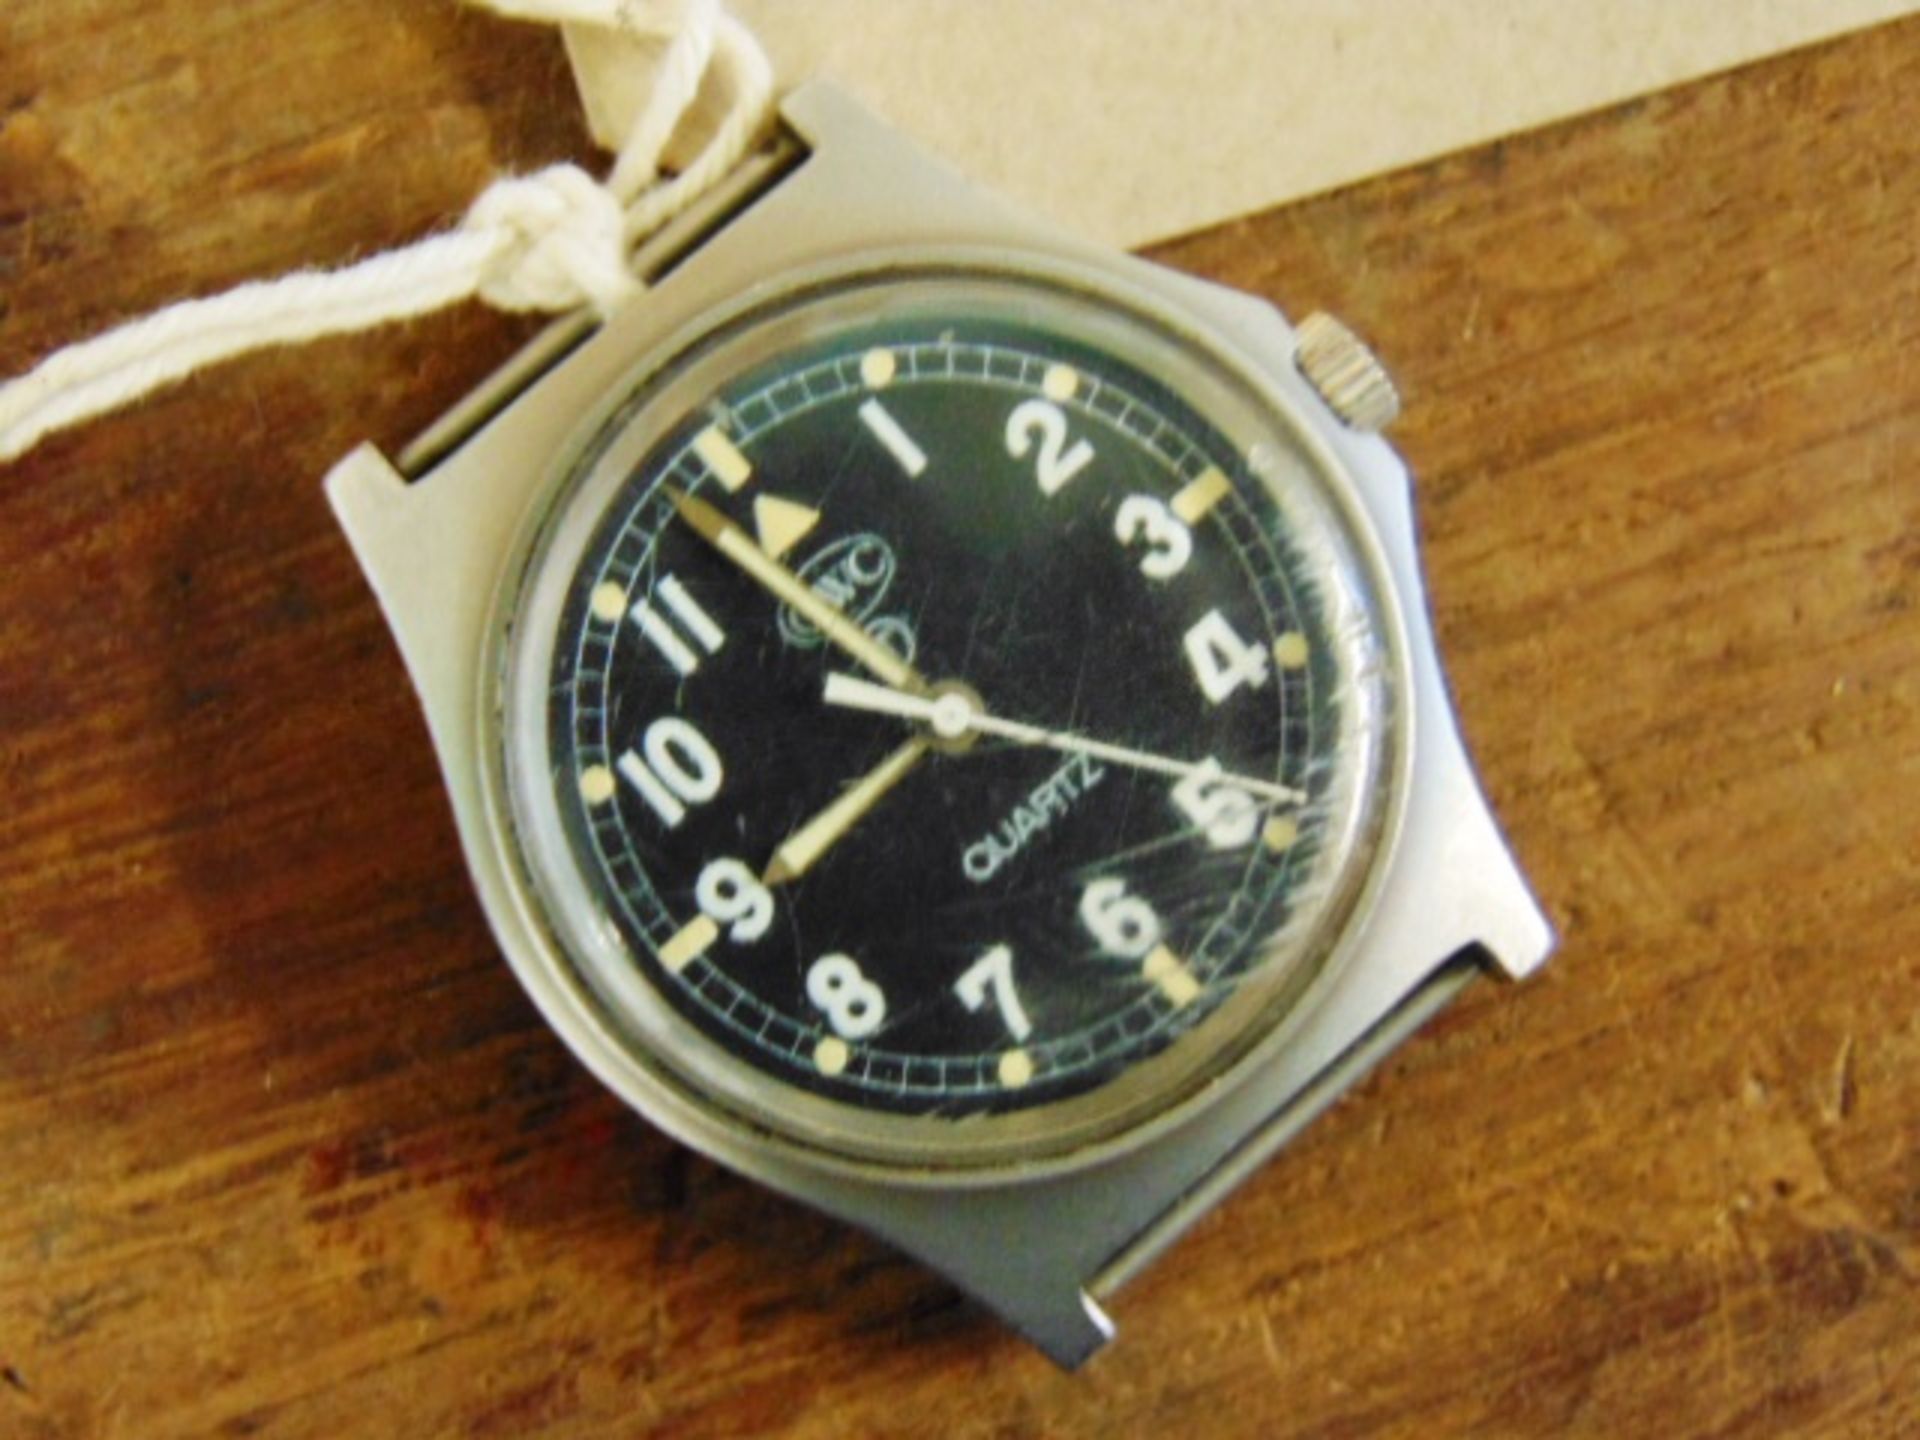 CWC (Fat Boy/Fat Case) quartz wrist watch - Image 2 of 4